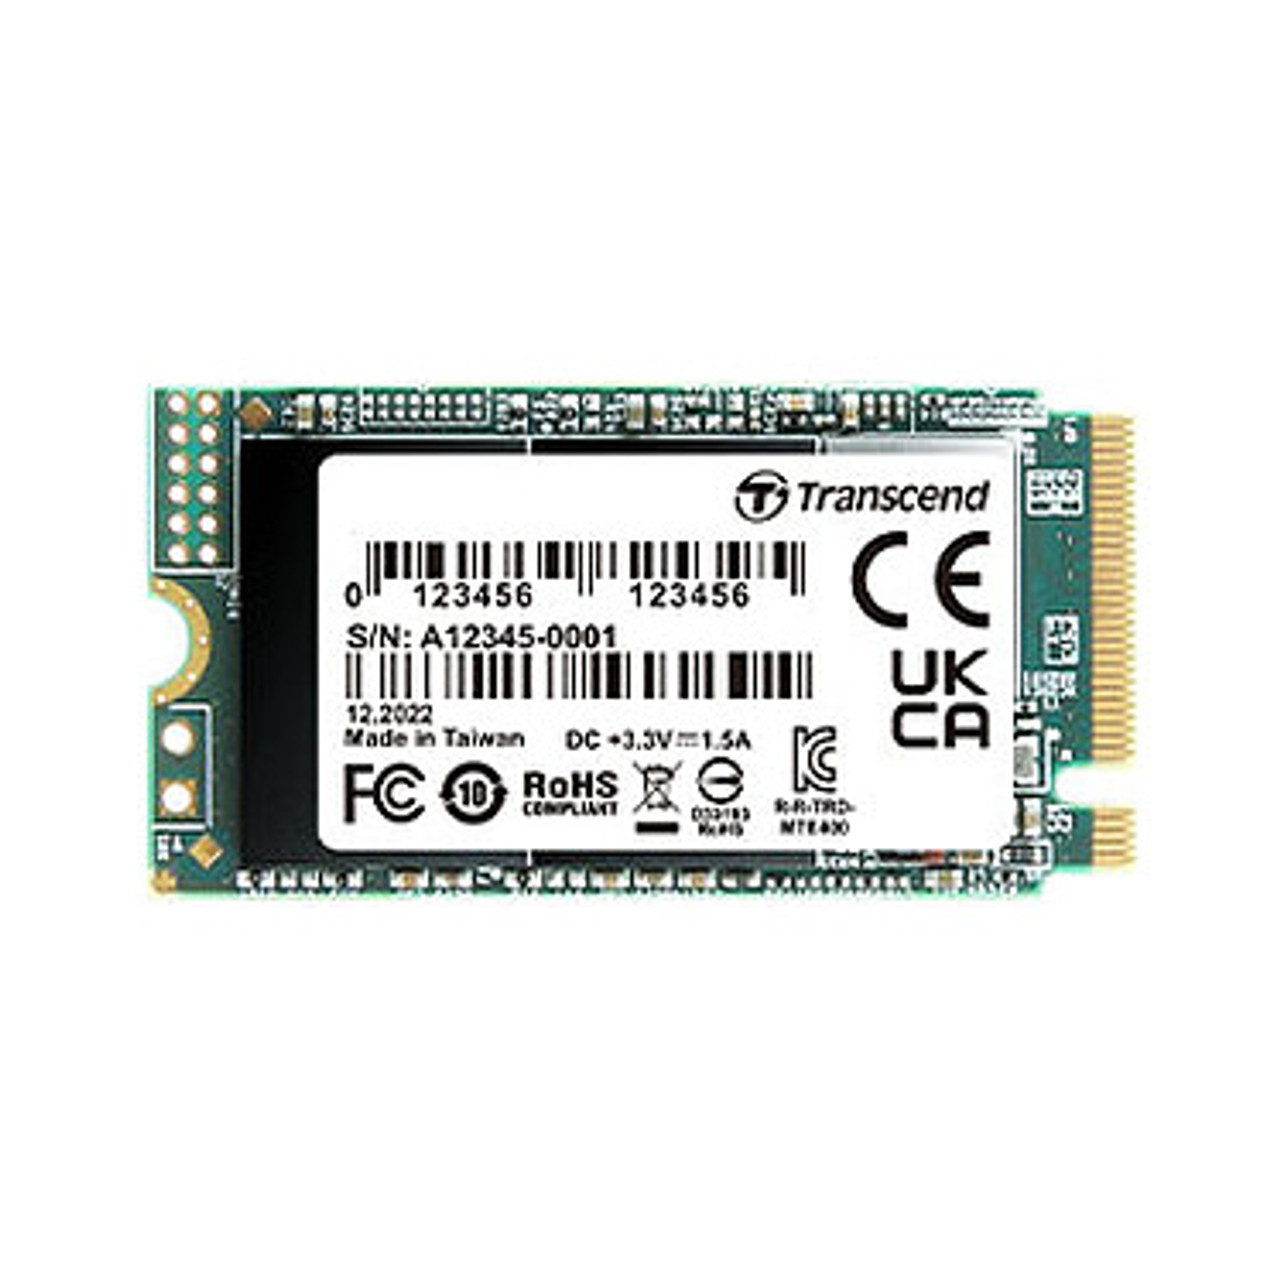 【SSD 1TB】Transcend M.2 NVMe TS1TMTE110Q